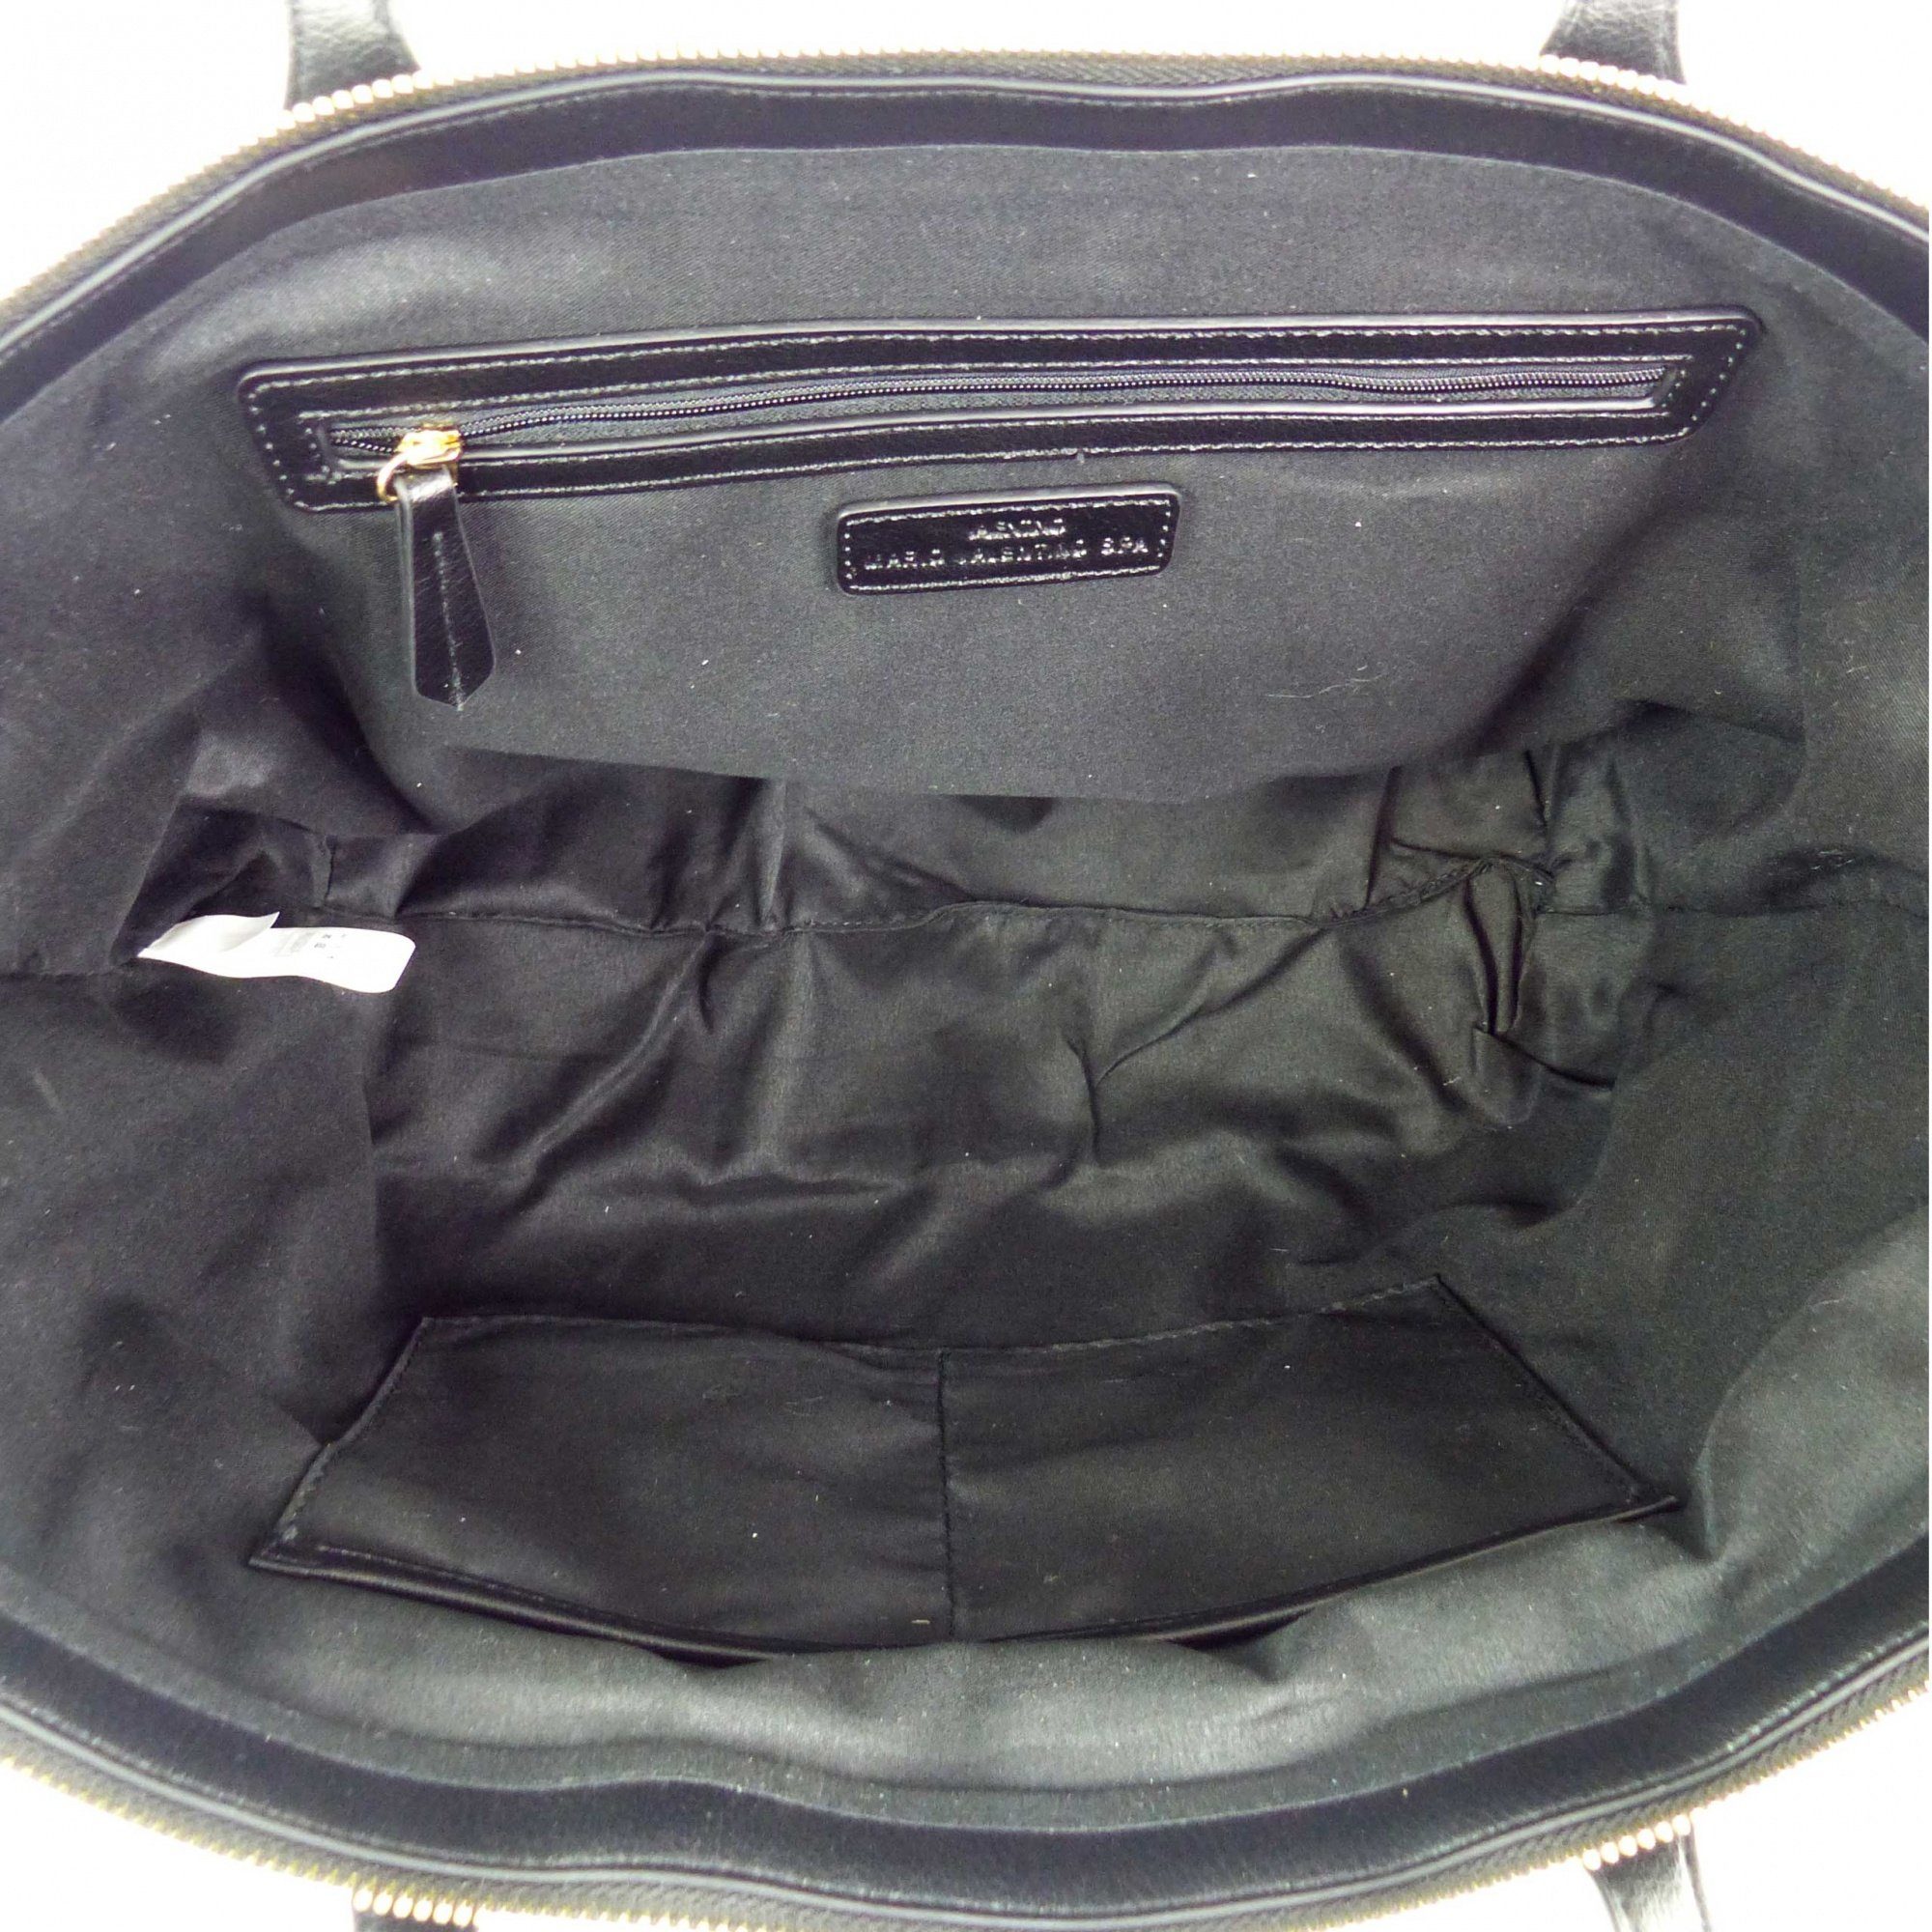 Handtasche VALENTINO Re BAGS VBS6V701-Nero Palm